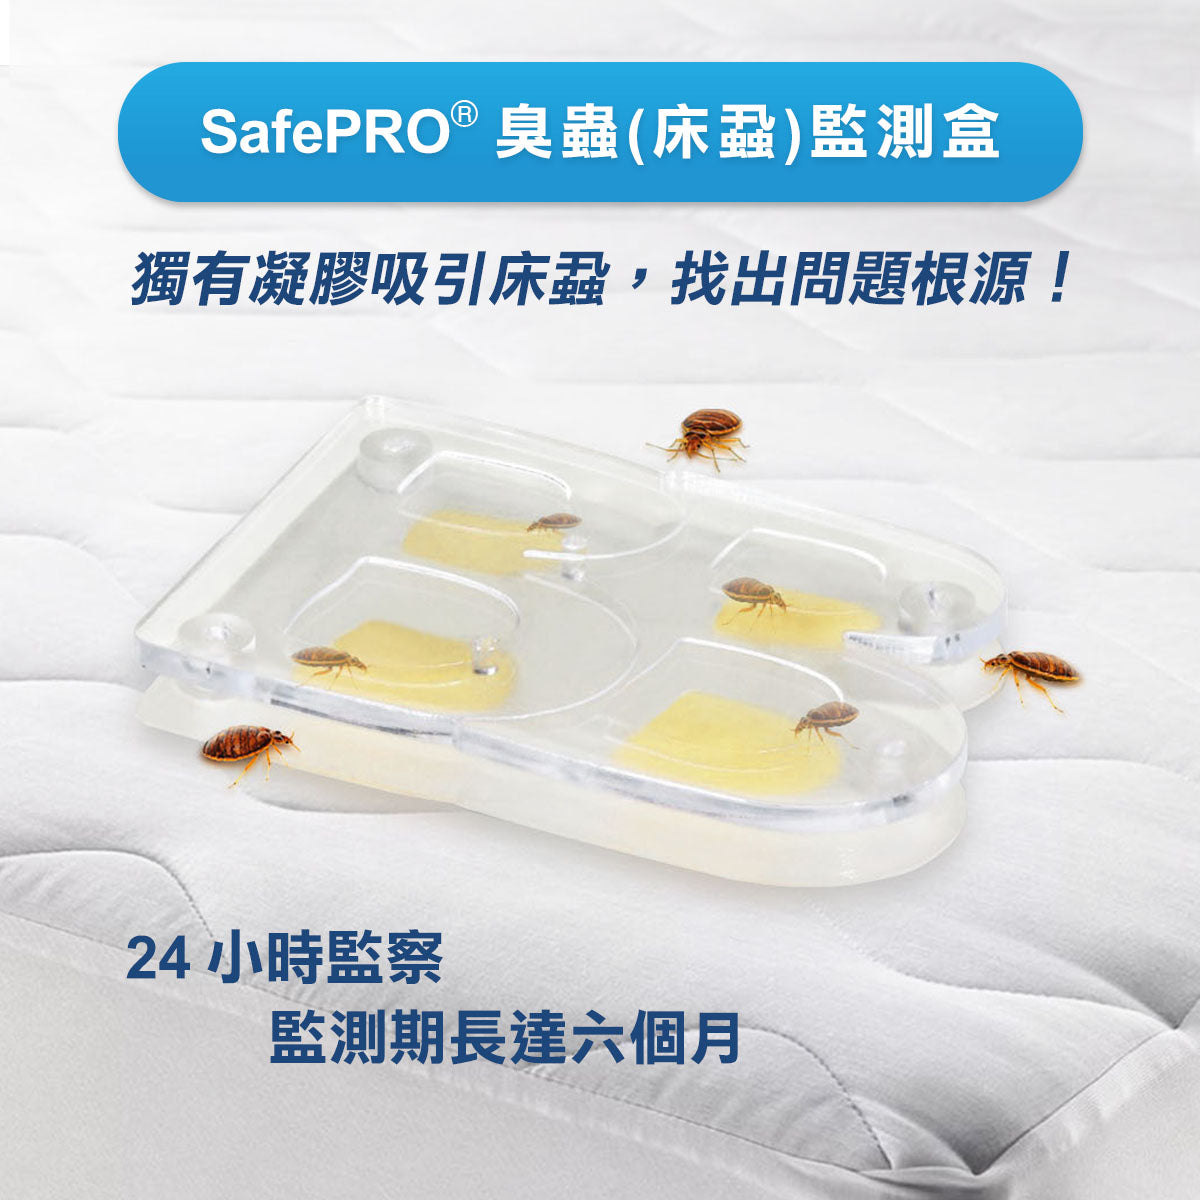 SafePRO® Bed Bug Alert Monitor (2 Pieces)